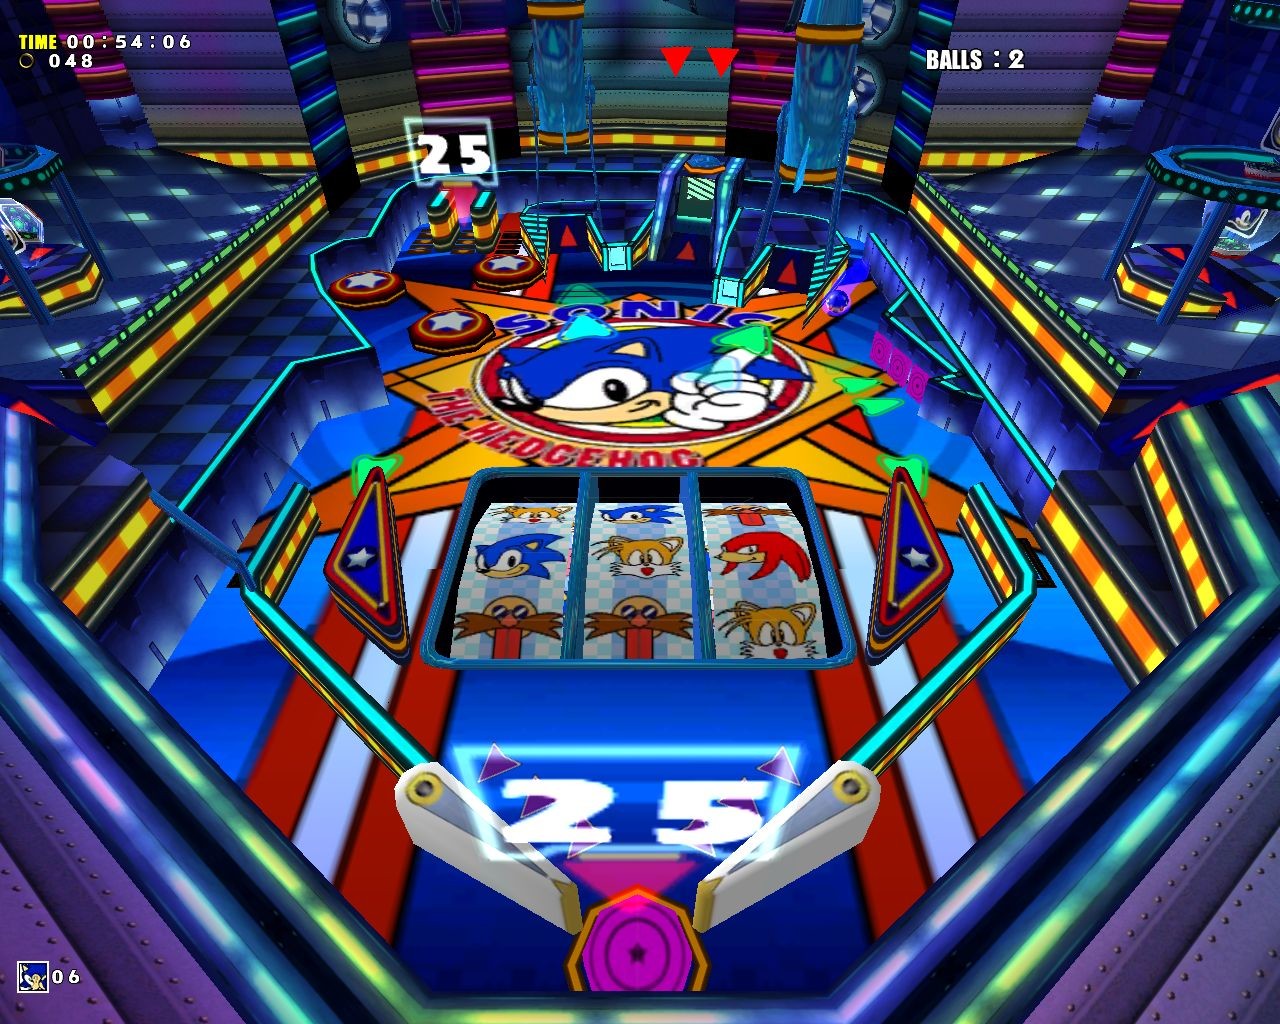 Sonic Adventure Casinopolis. Sonic Adventure DX казино. Sonic Pinball. Sonic Adventure Casinopolis фон. Игра соник прохождение